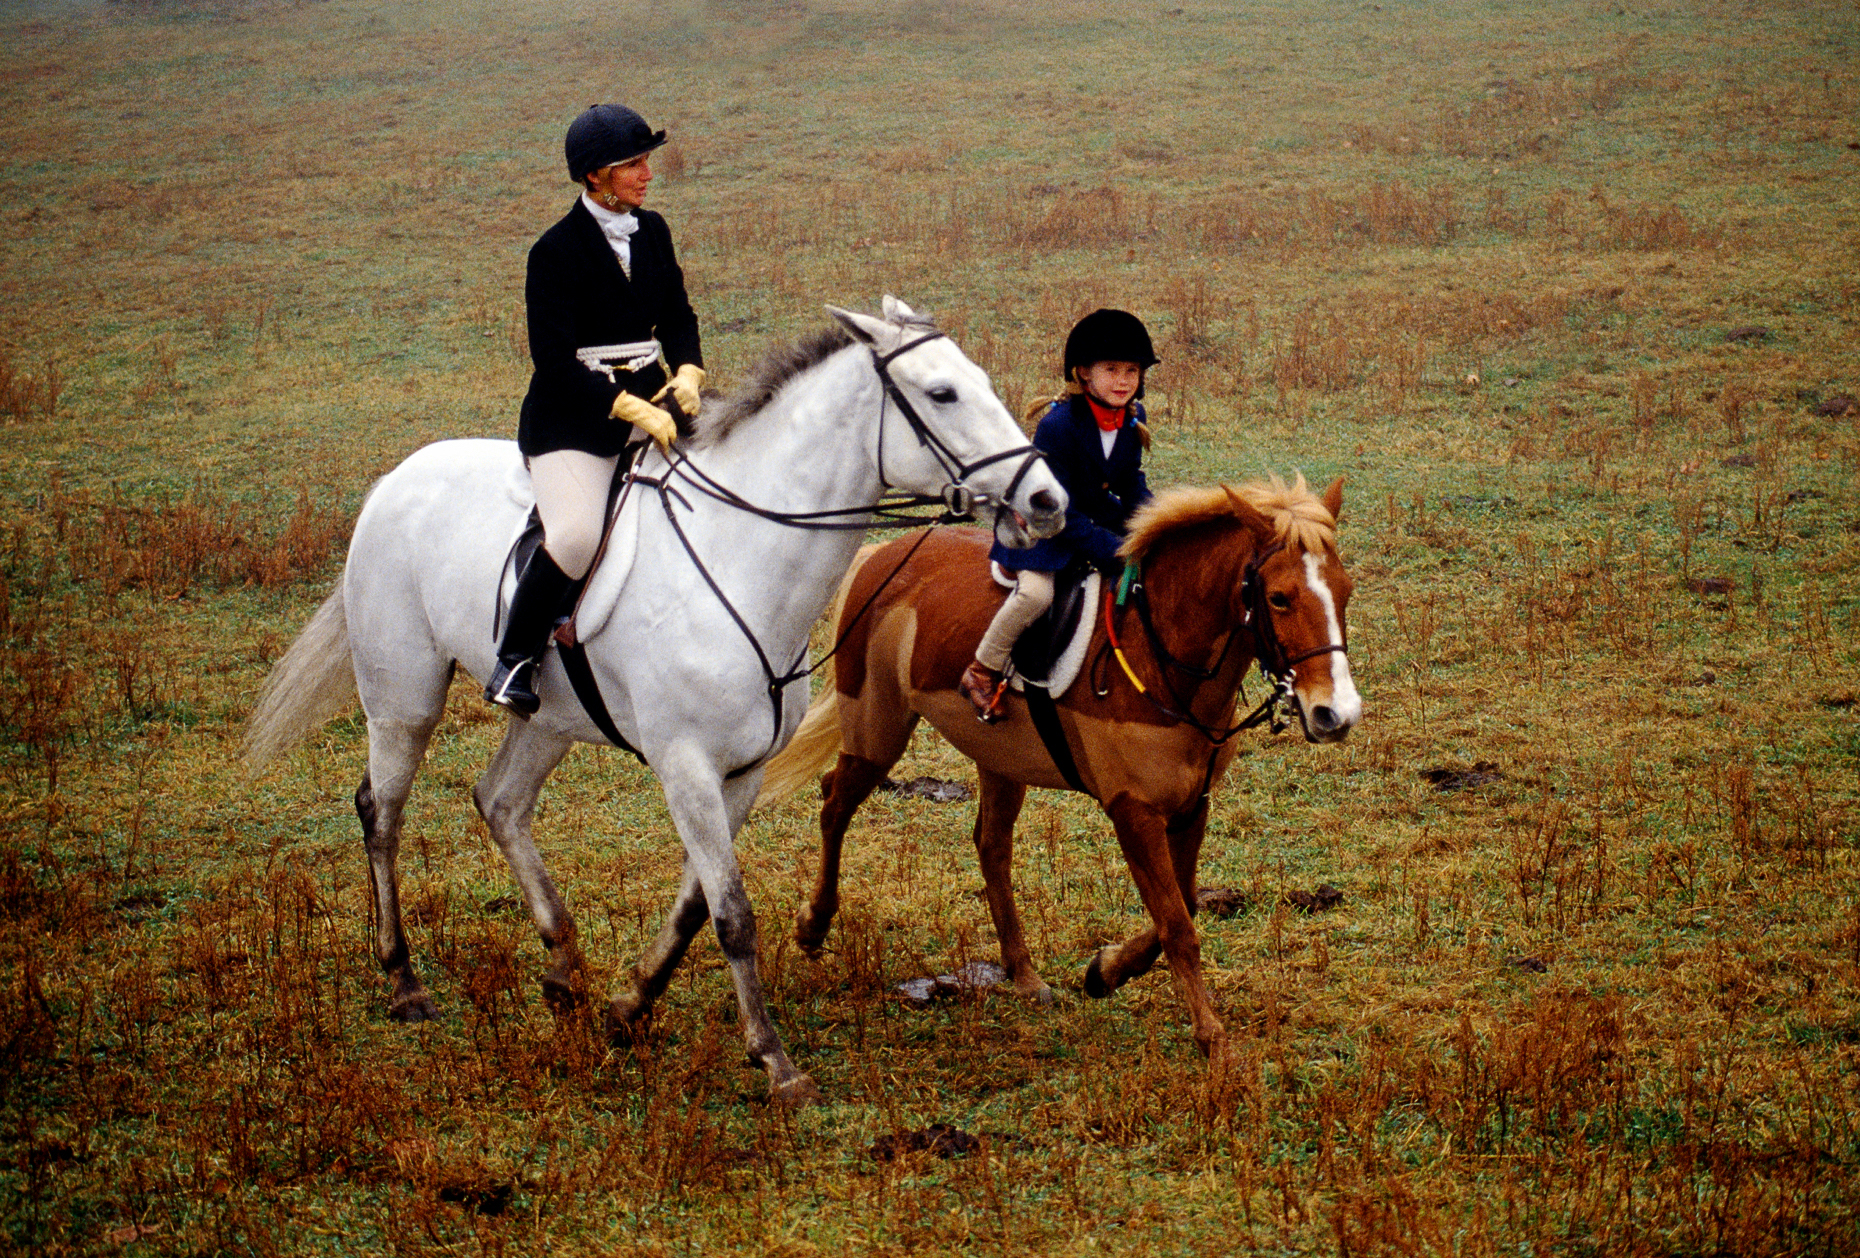 FOX HUNTING ON HORSEBACK, RUNNYMEADE FARM, CHESTER COUNTY, PENNSYLVANIA, USA